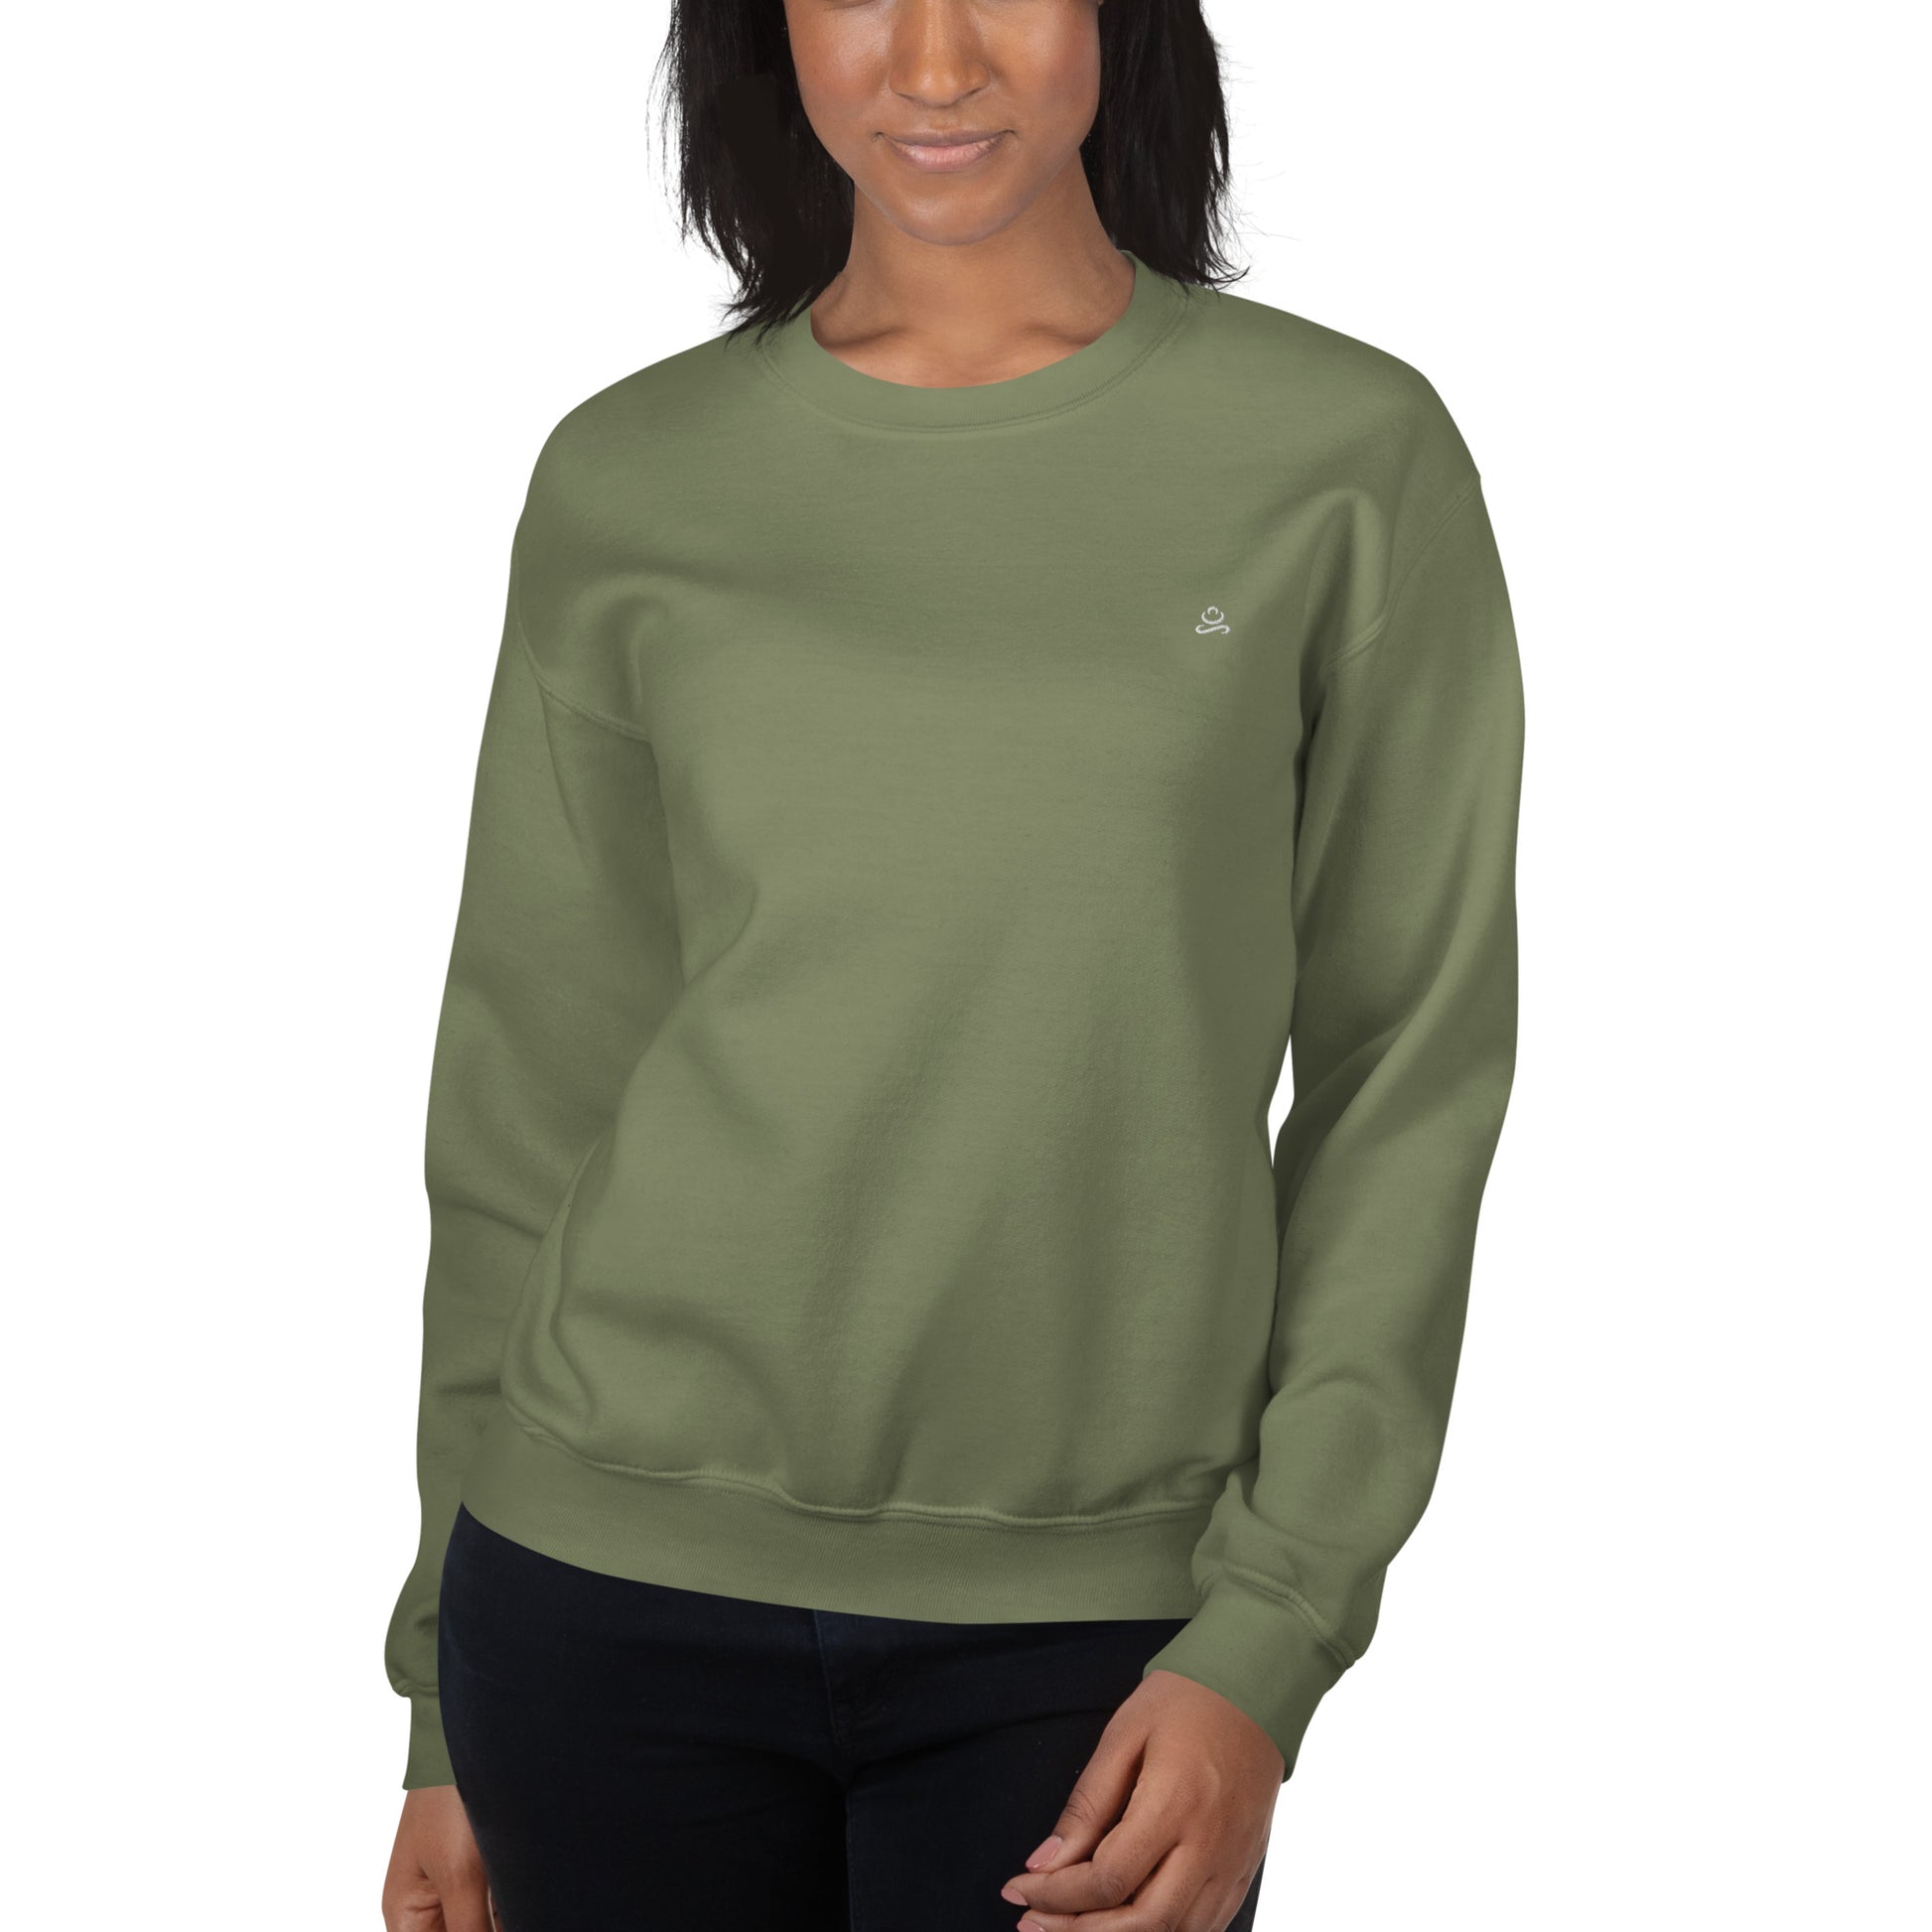 Military Green Women's Cotton Sweatshirt by Women's Cotton Sweatshirt sold by Jain Yoga